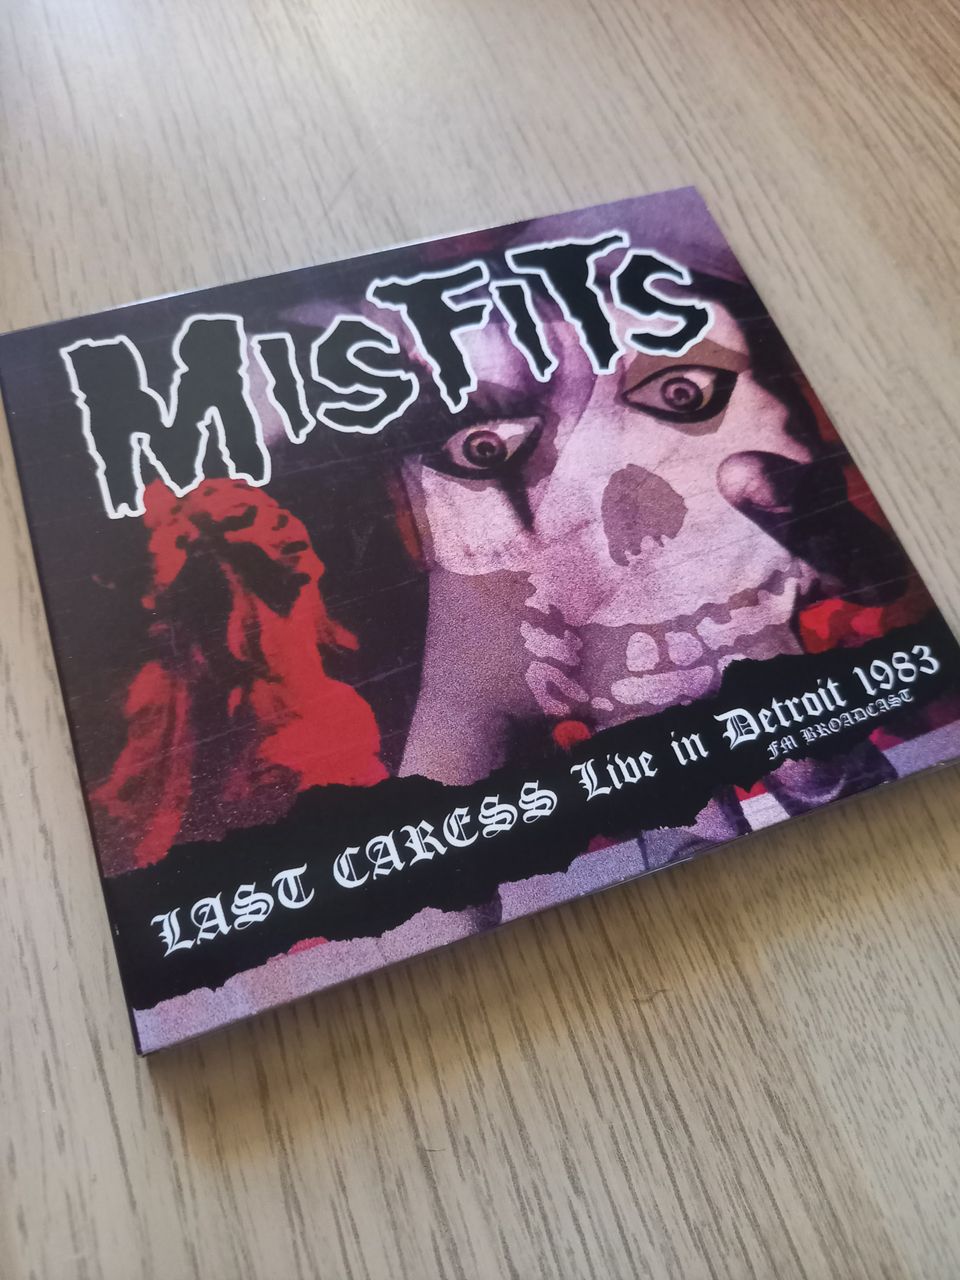 Misfits - Last Caress live CD